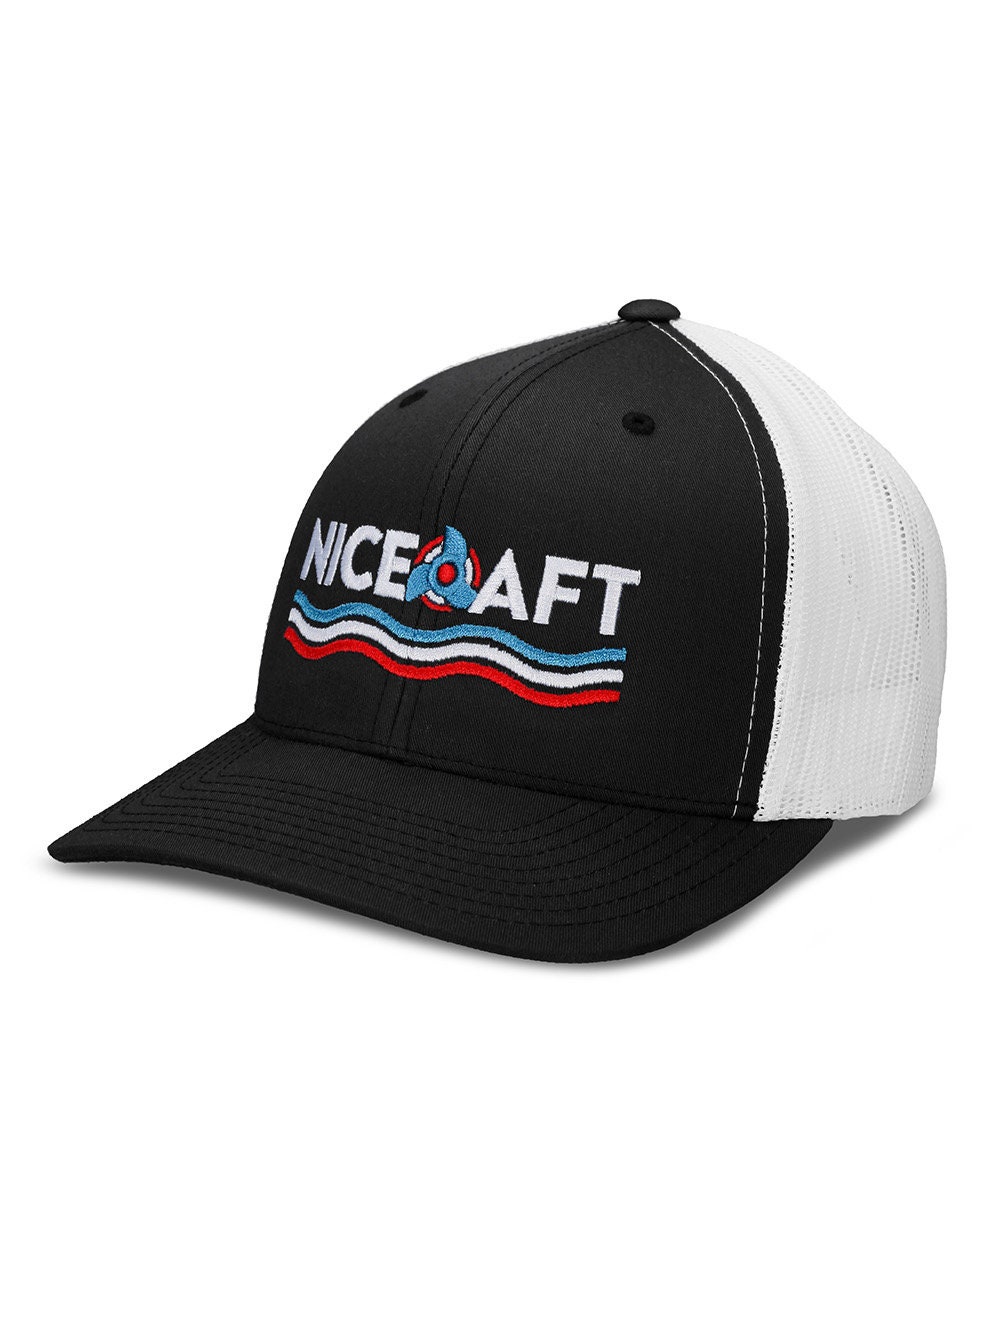 NICE AFT Embroidered Trucker Hat Boater Hat Lake Baseball | Etsy